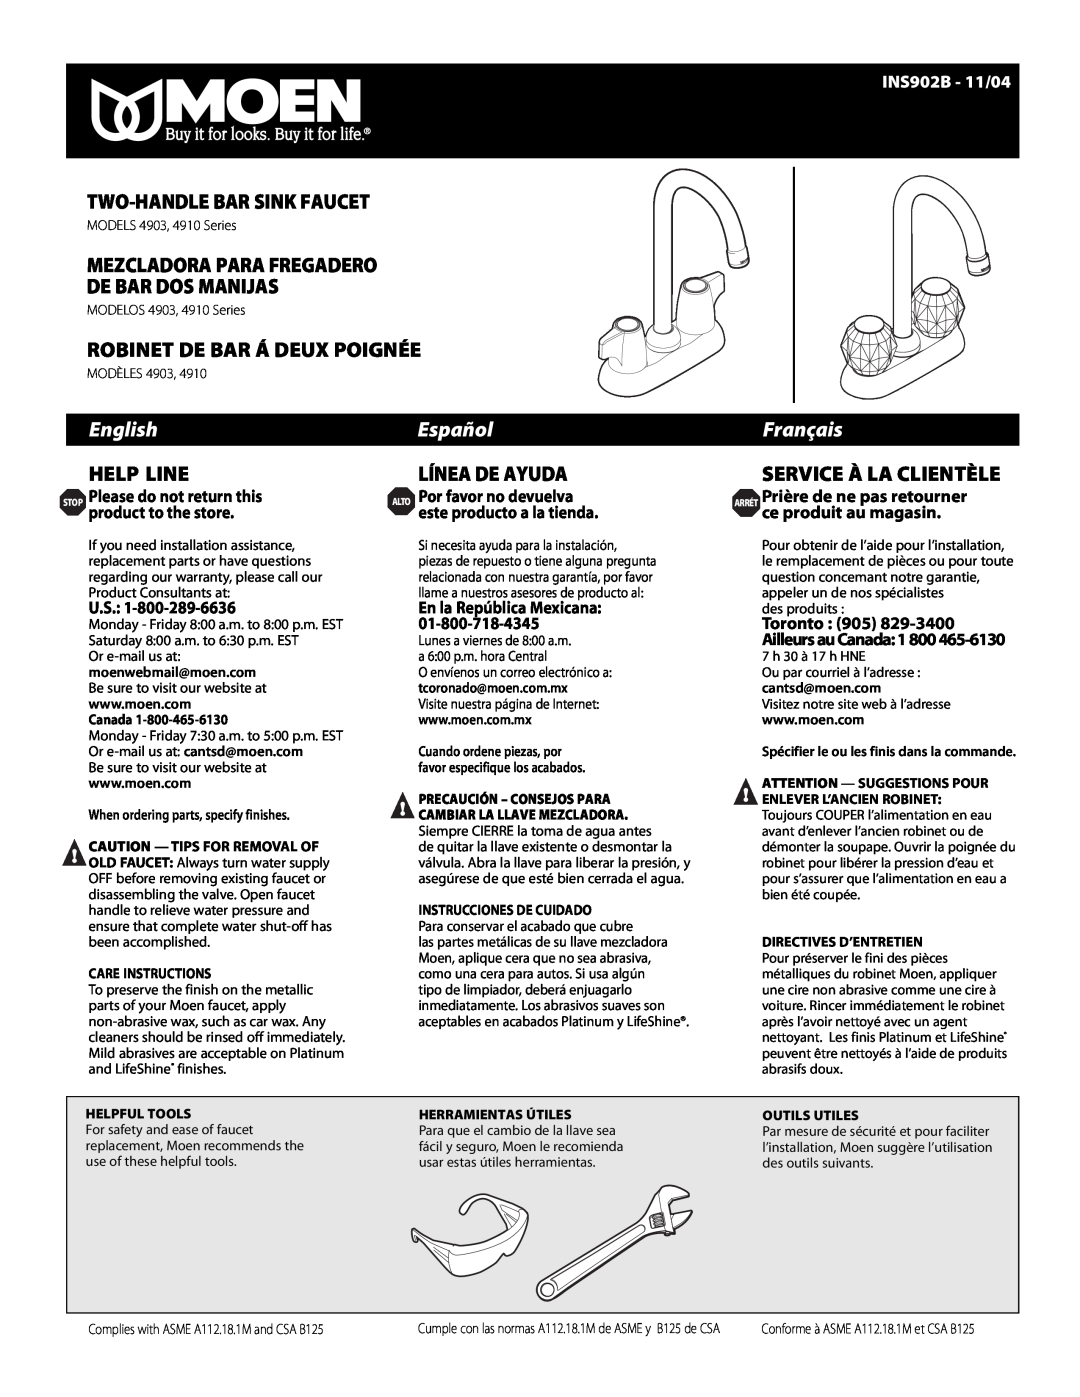 Moen warranty INS902B - 11/04, Two-Handle Bar Sink Faucet, Mezcladora Para Fregadero De Bar Dos Manijas, English 